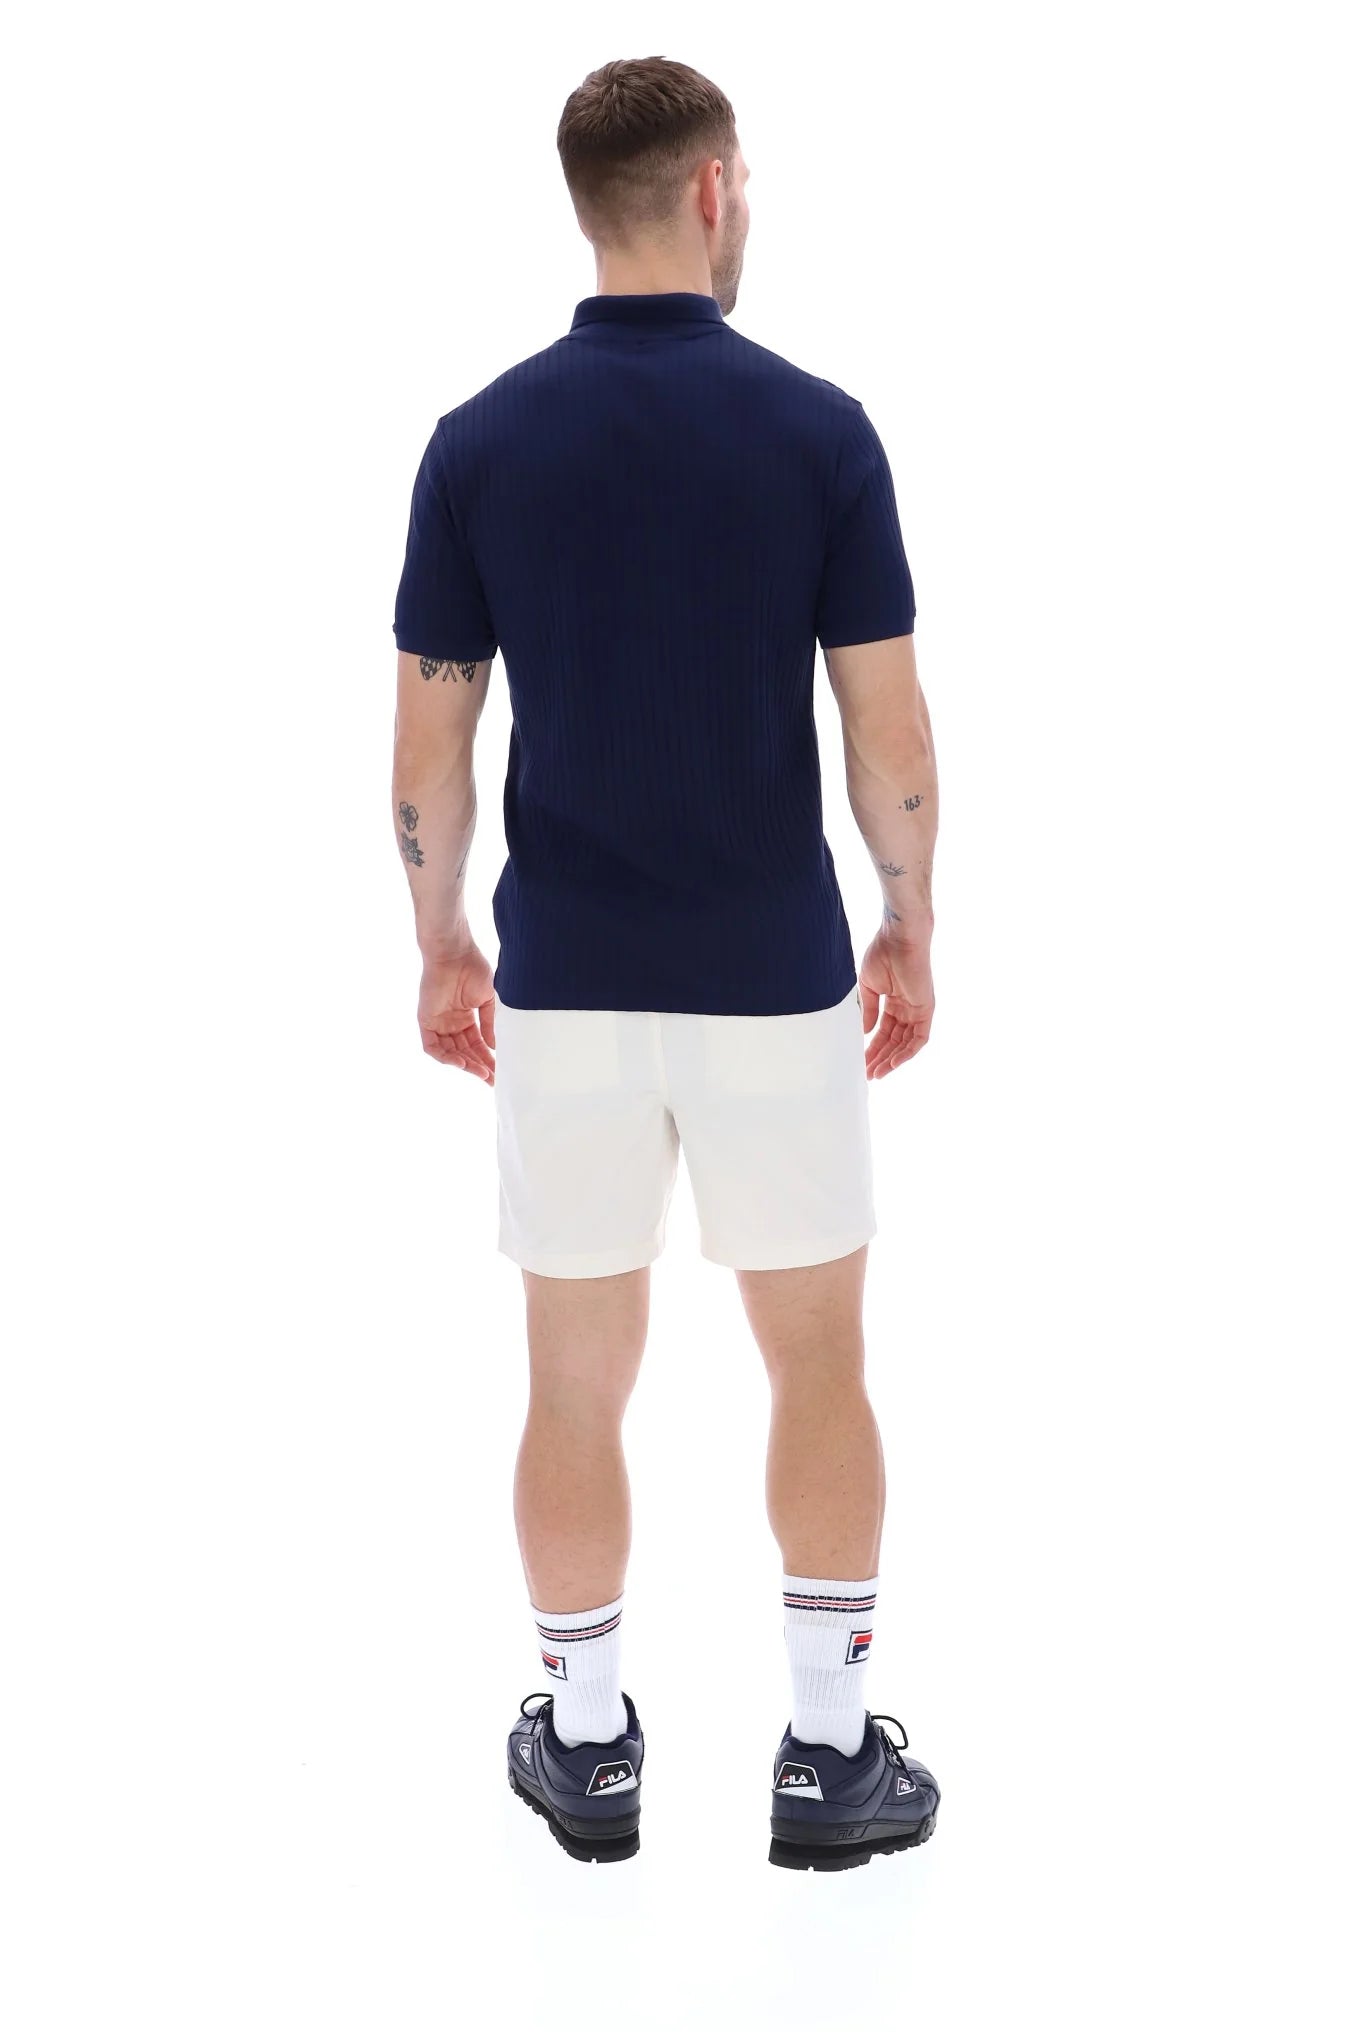 FILA Pannuci Slim Fit Polo Navy - Raw Menswear